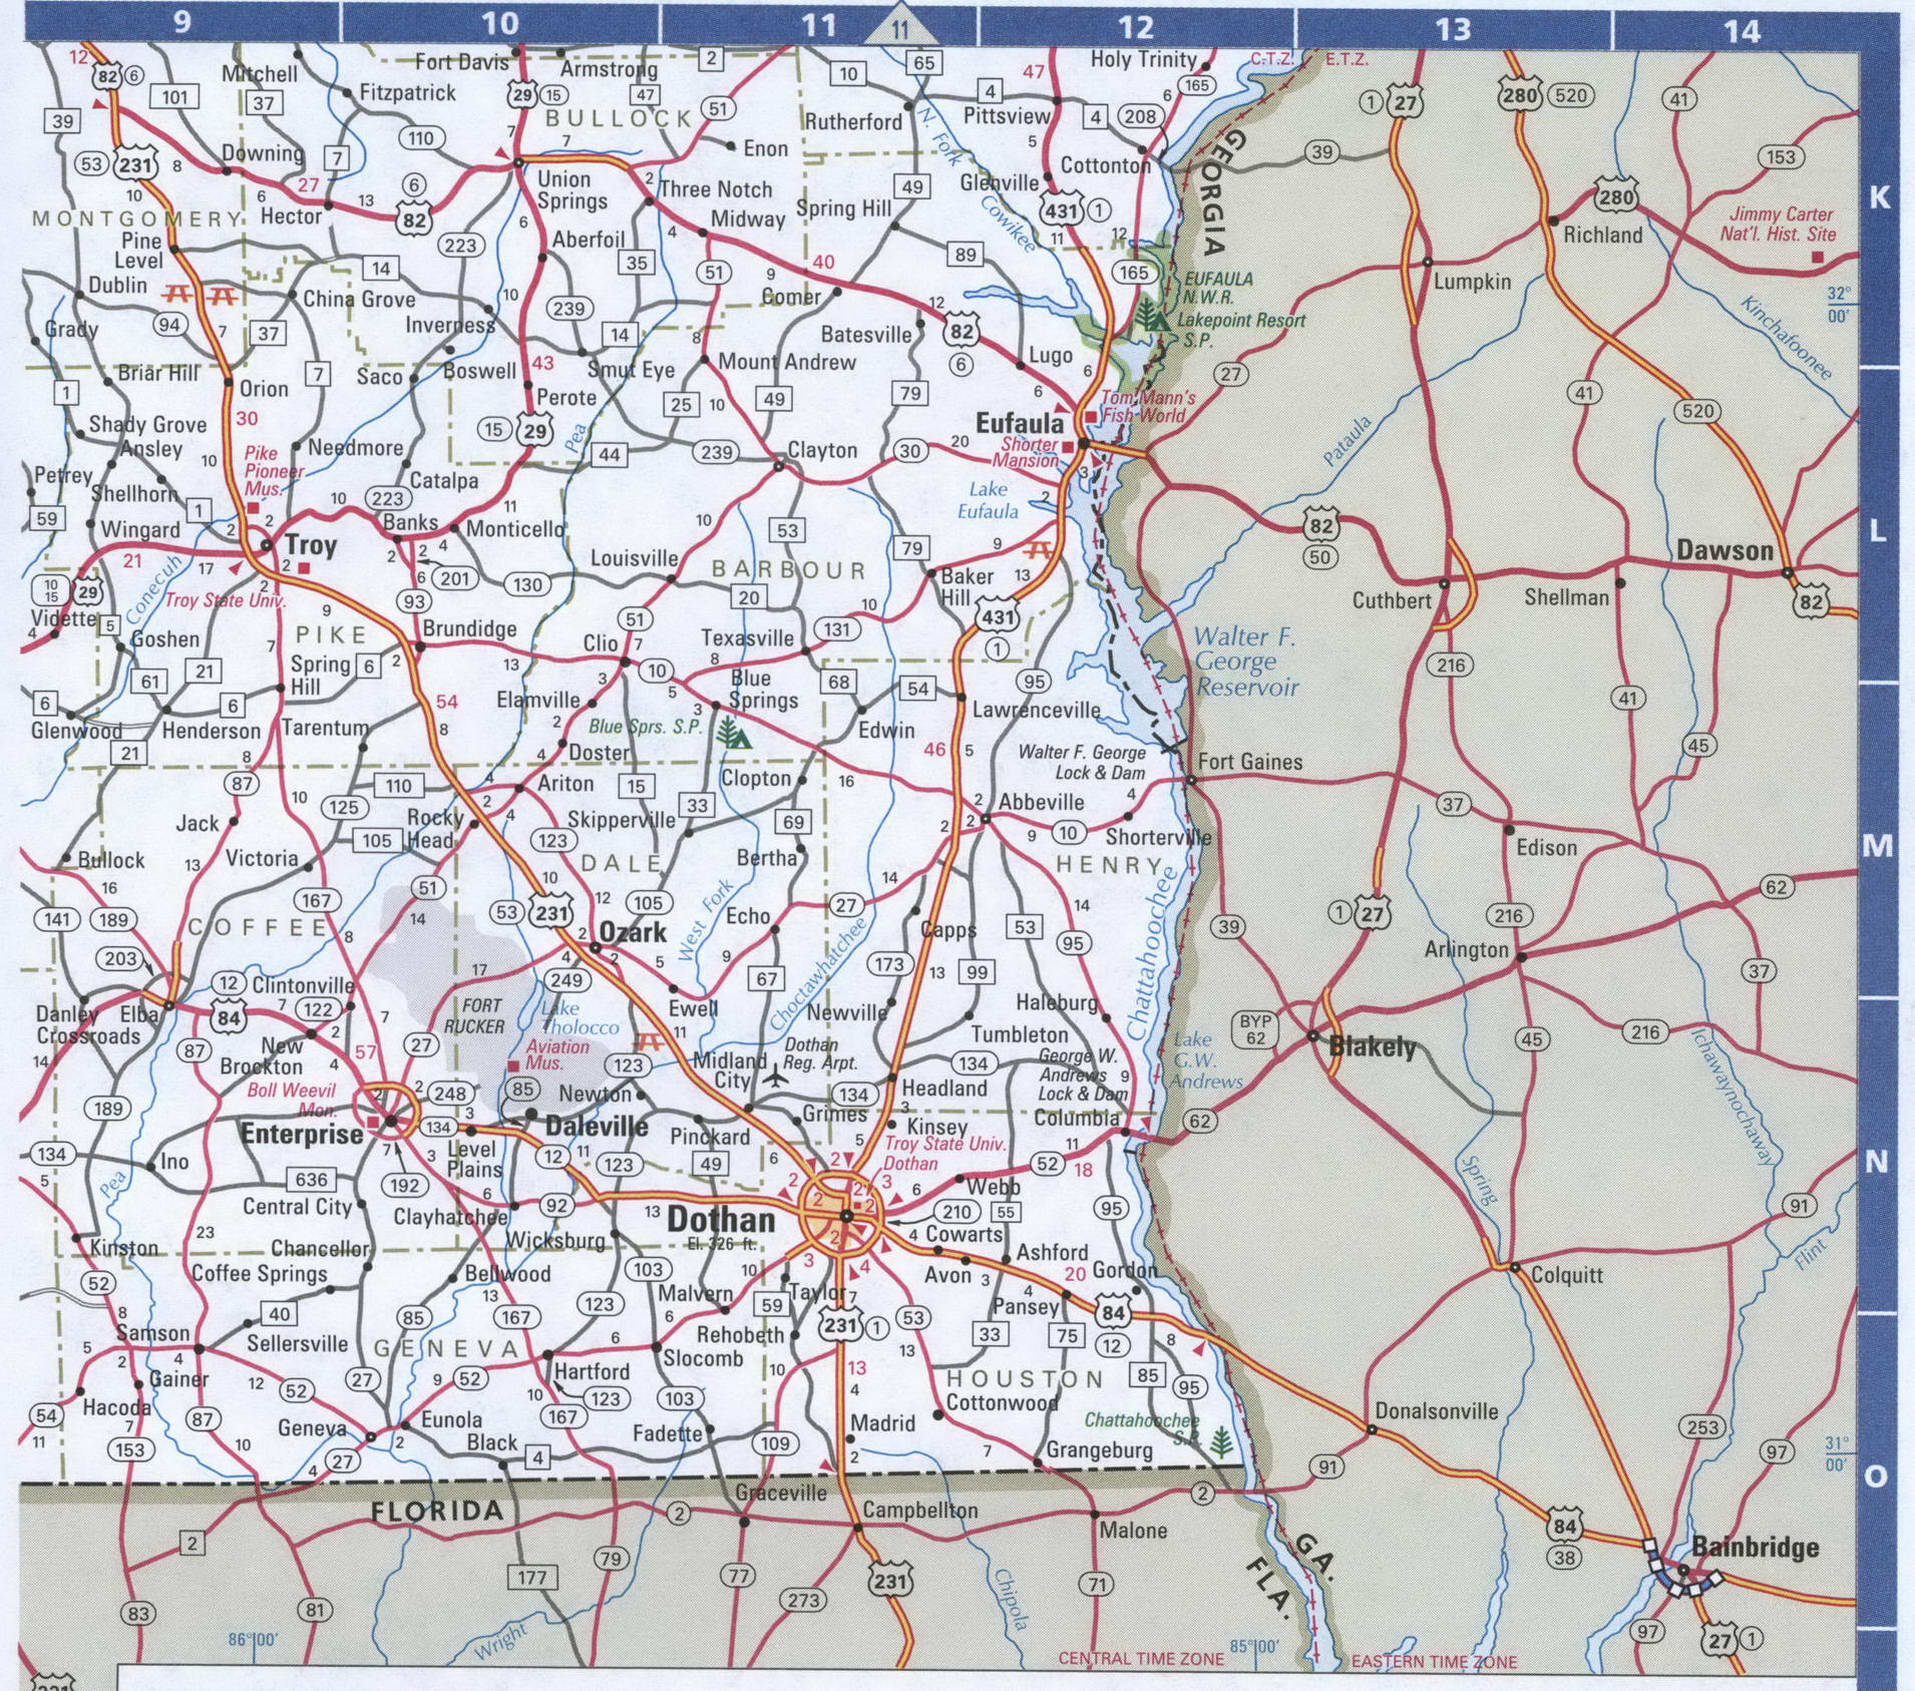 Southern Alabama detailed road map